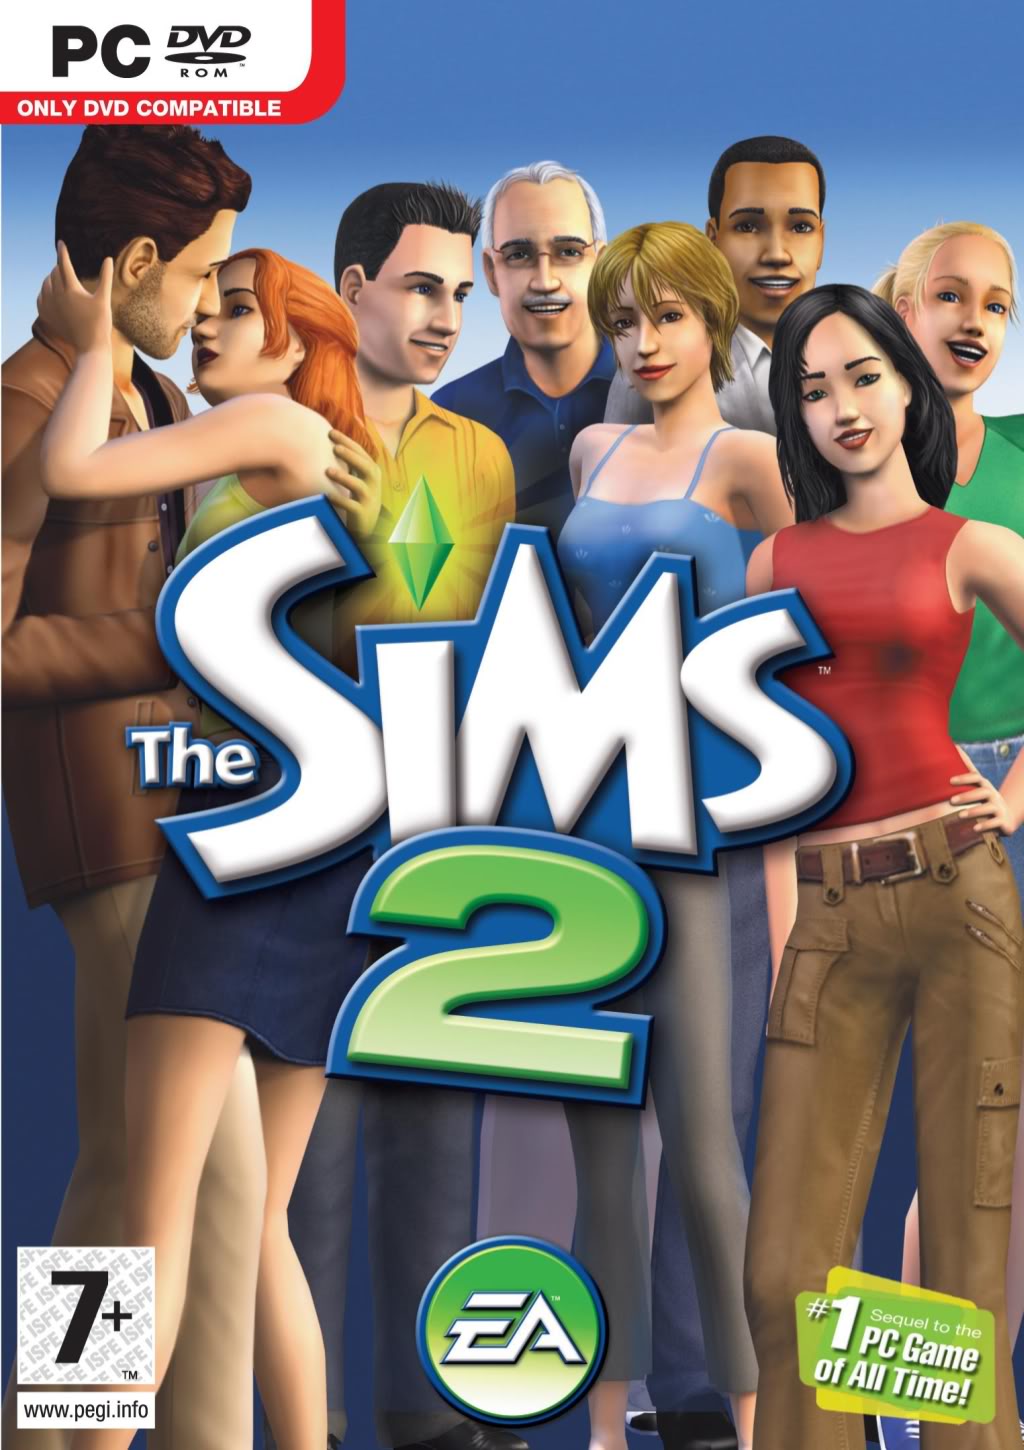 Sims 2 Full Version Free Download